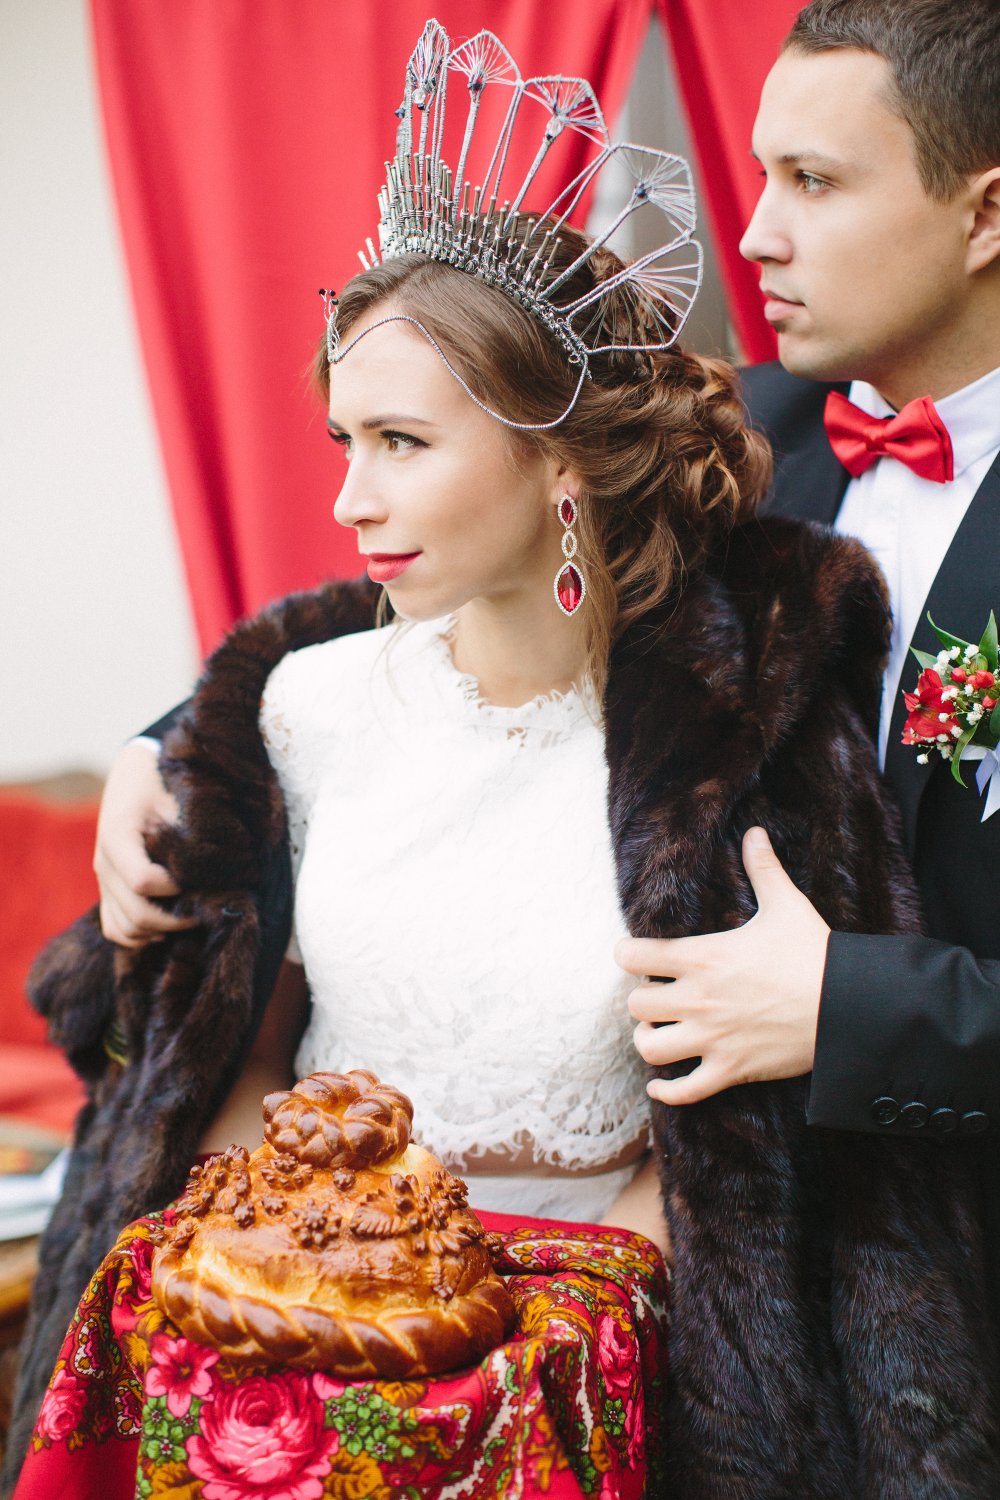 Russian style wedding. Свадьба в русском стиле